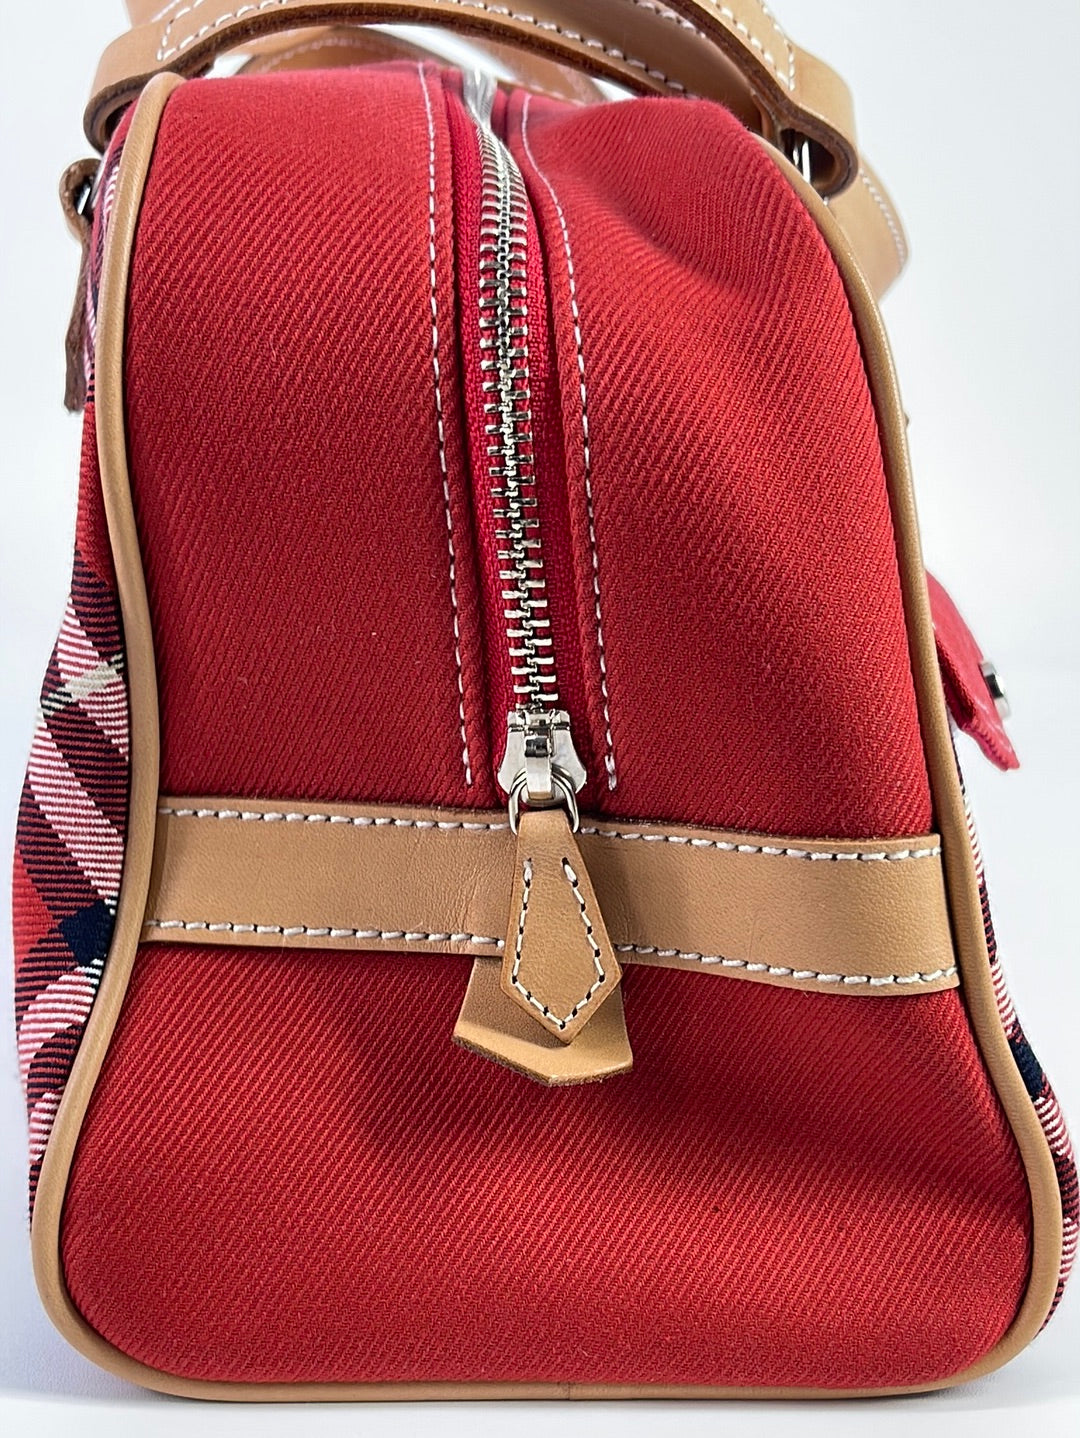 Preloved Burberry Blue Label Red Check Handbag ZA493230 051123